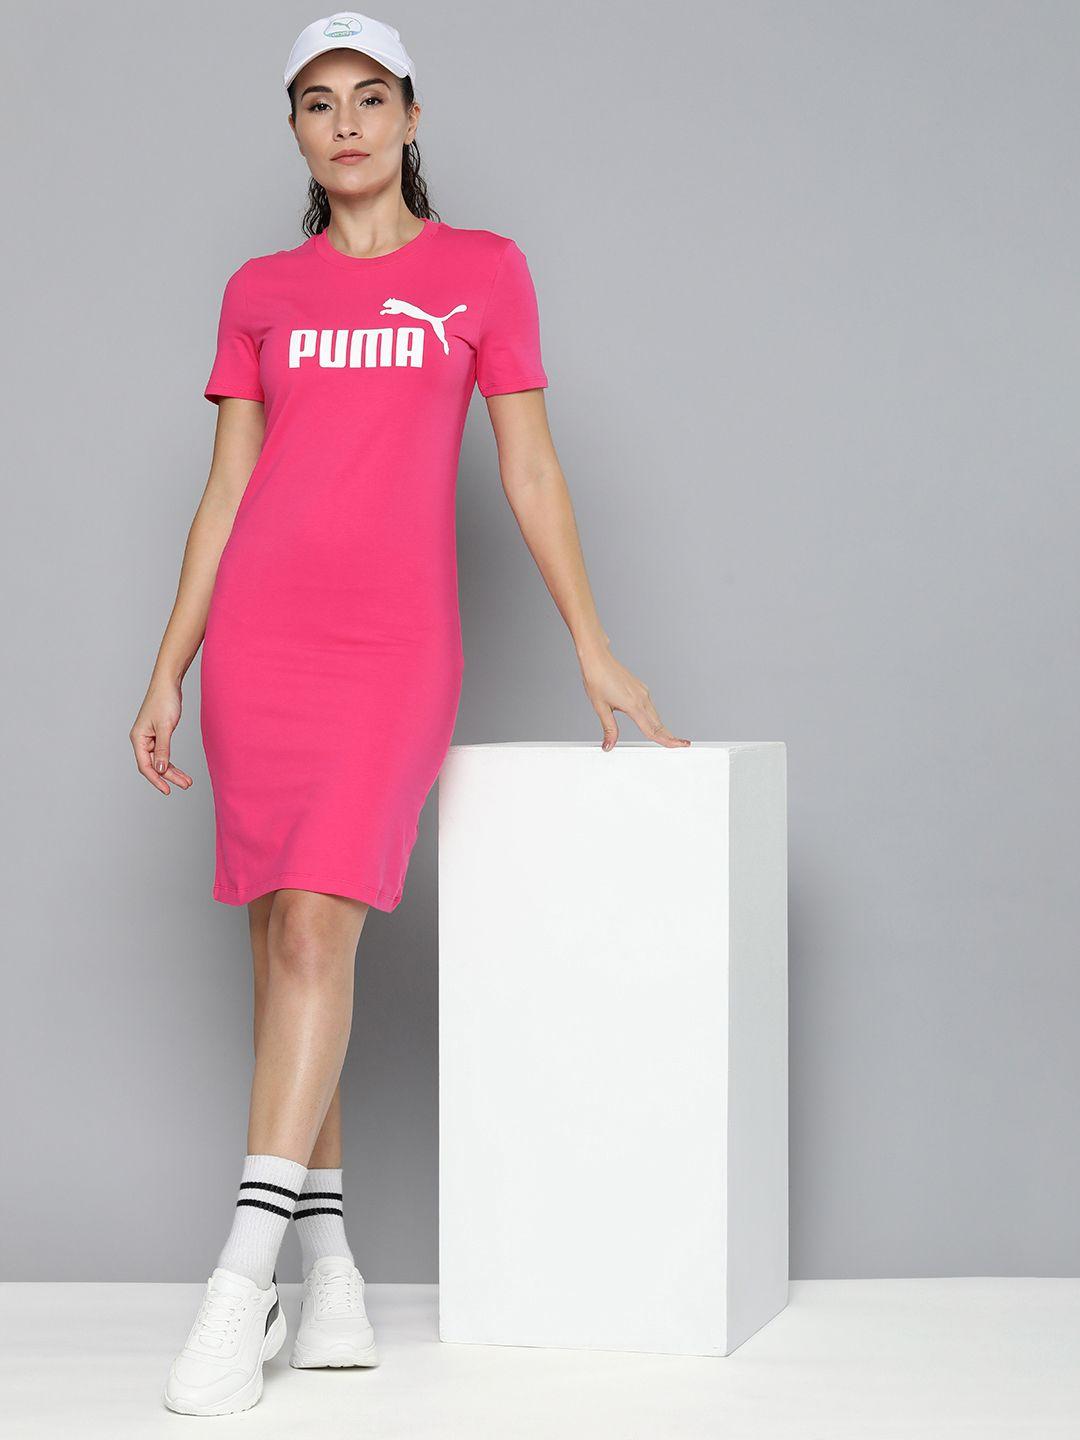 puma slim fit brand logo printed t-shirt dress